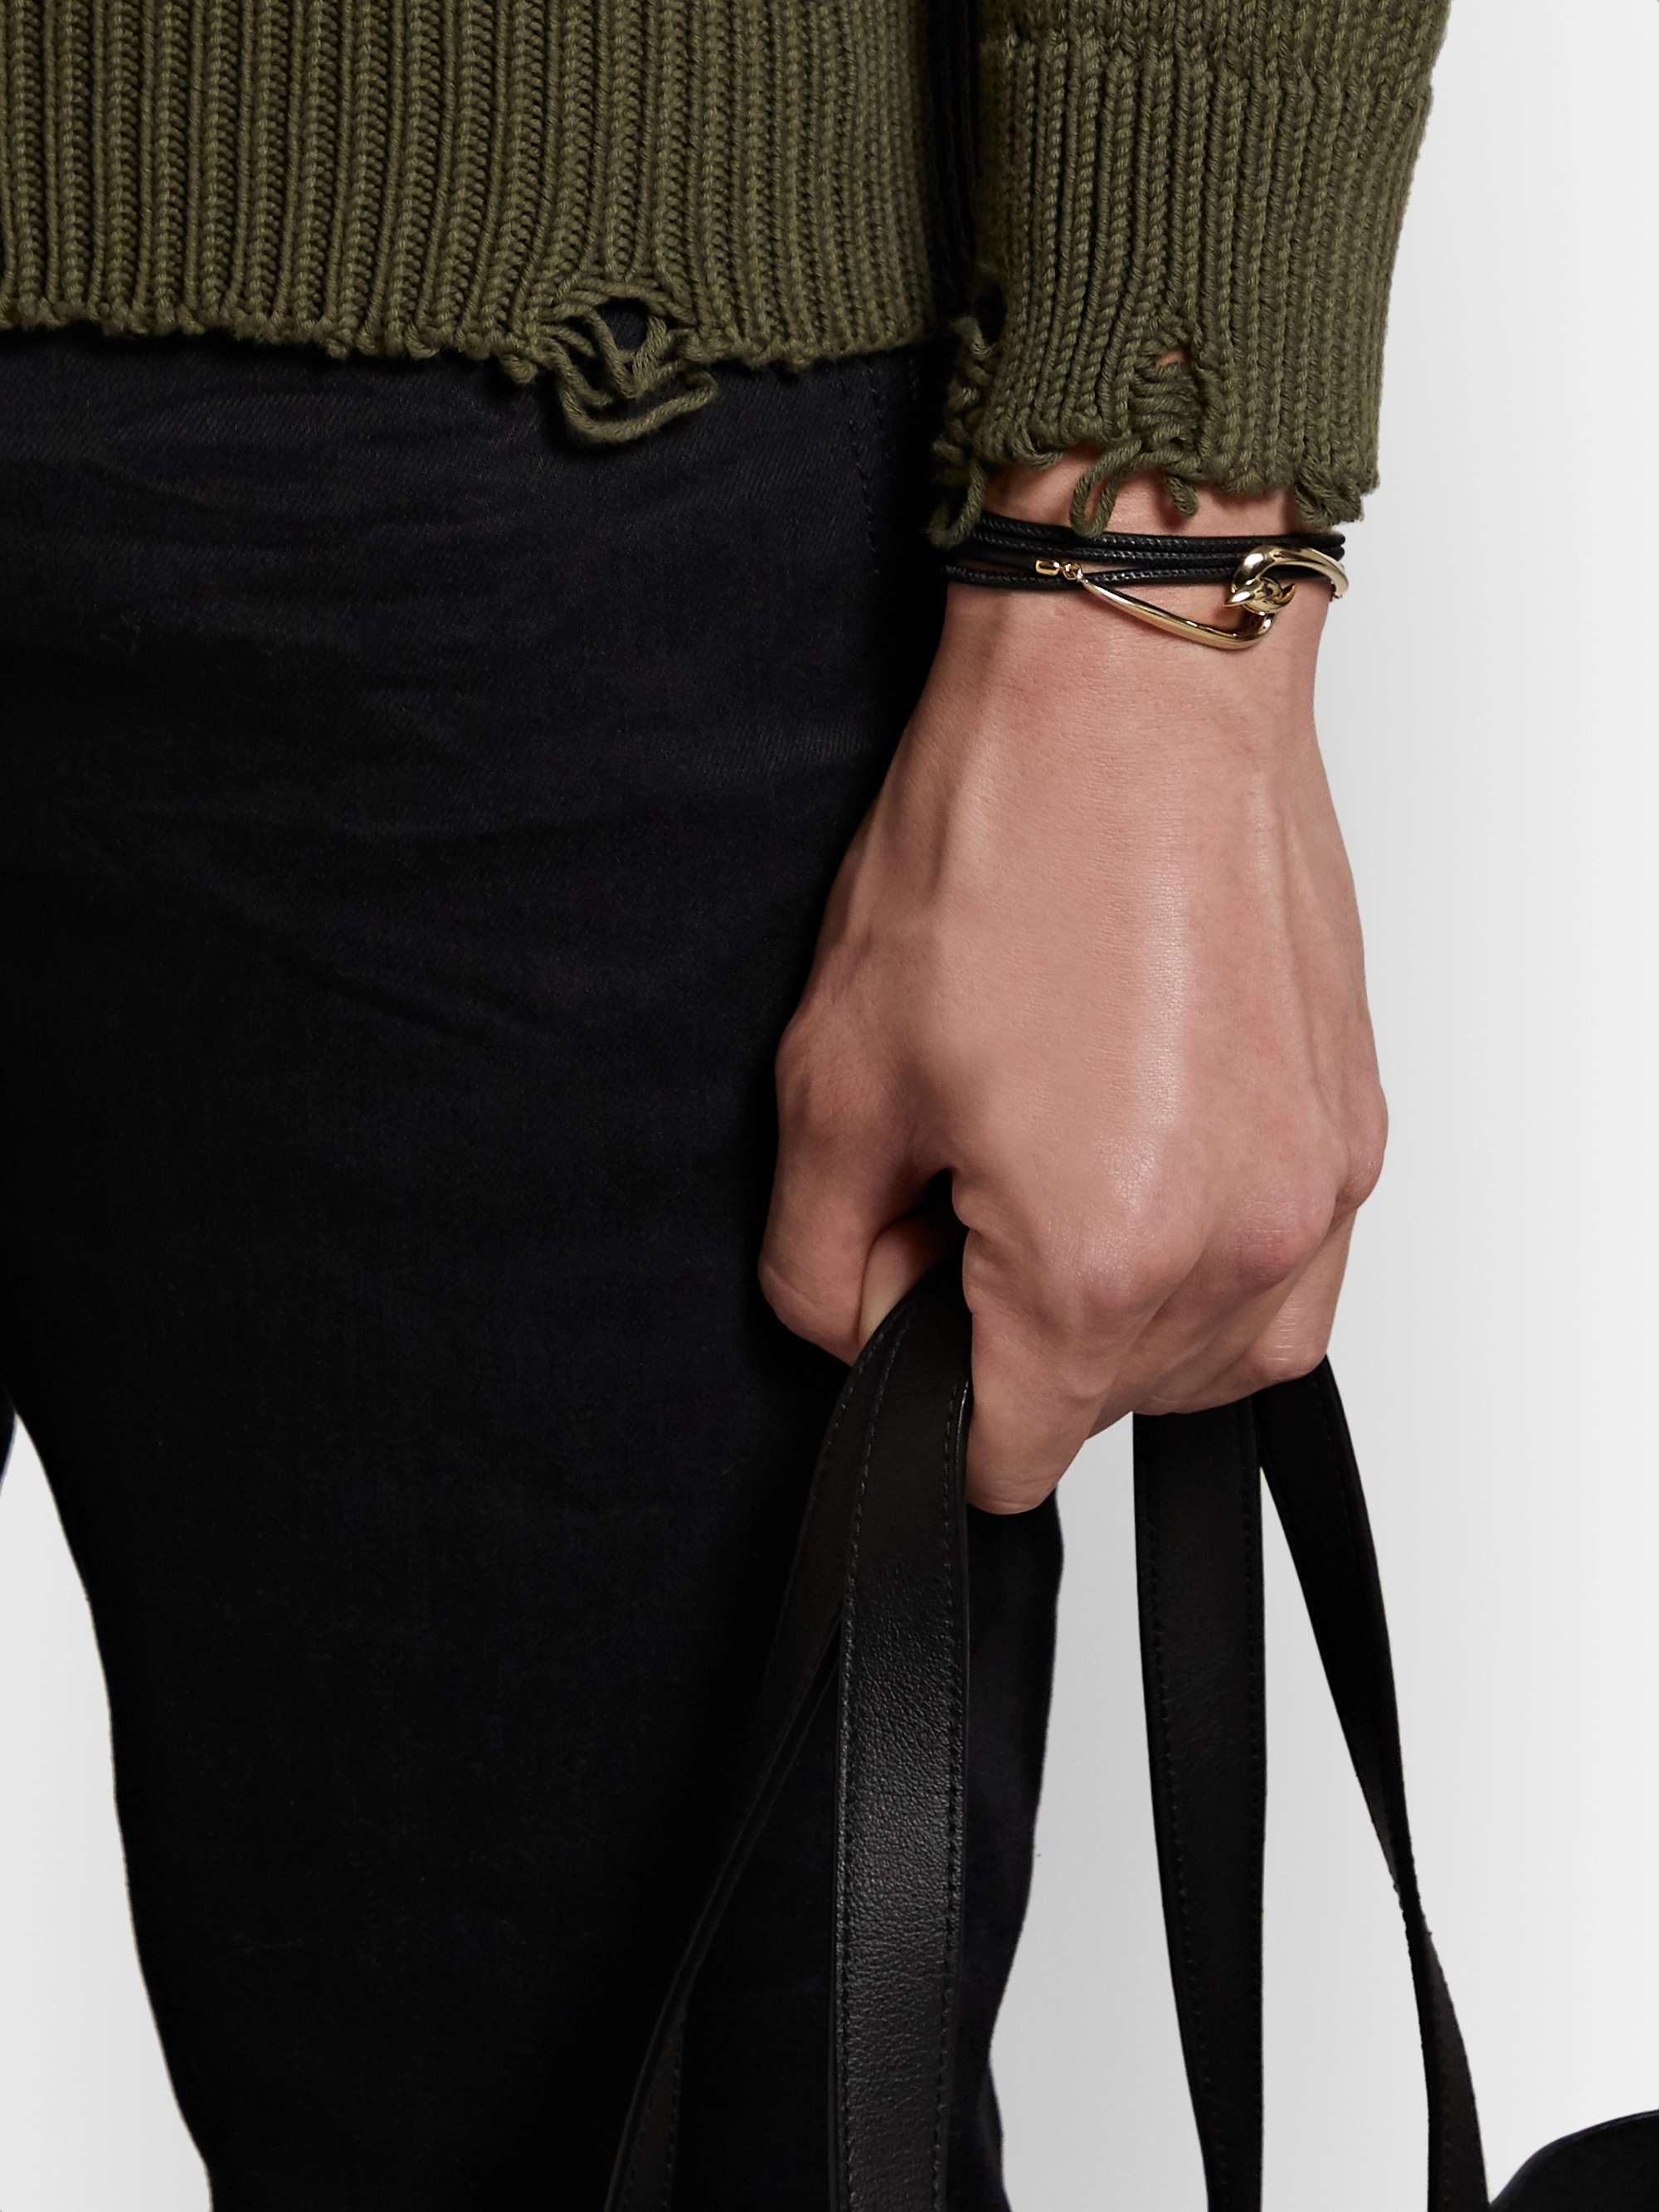 SHAUN LEANE Leather and Gold Vermeil Wrap Bracelet